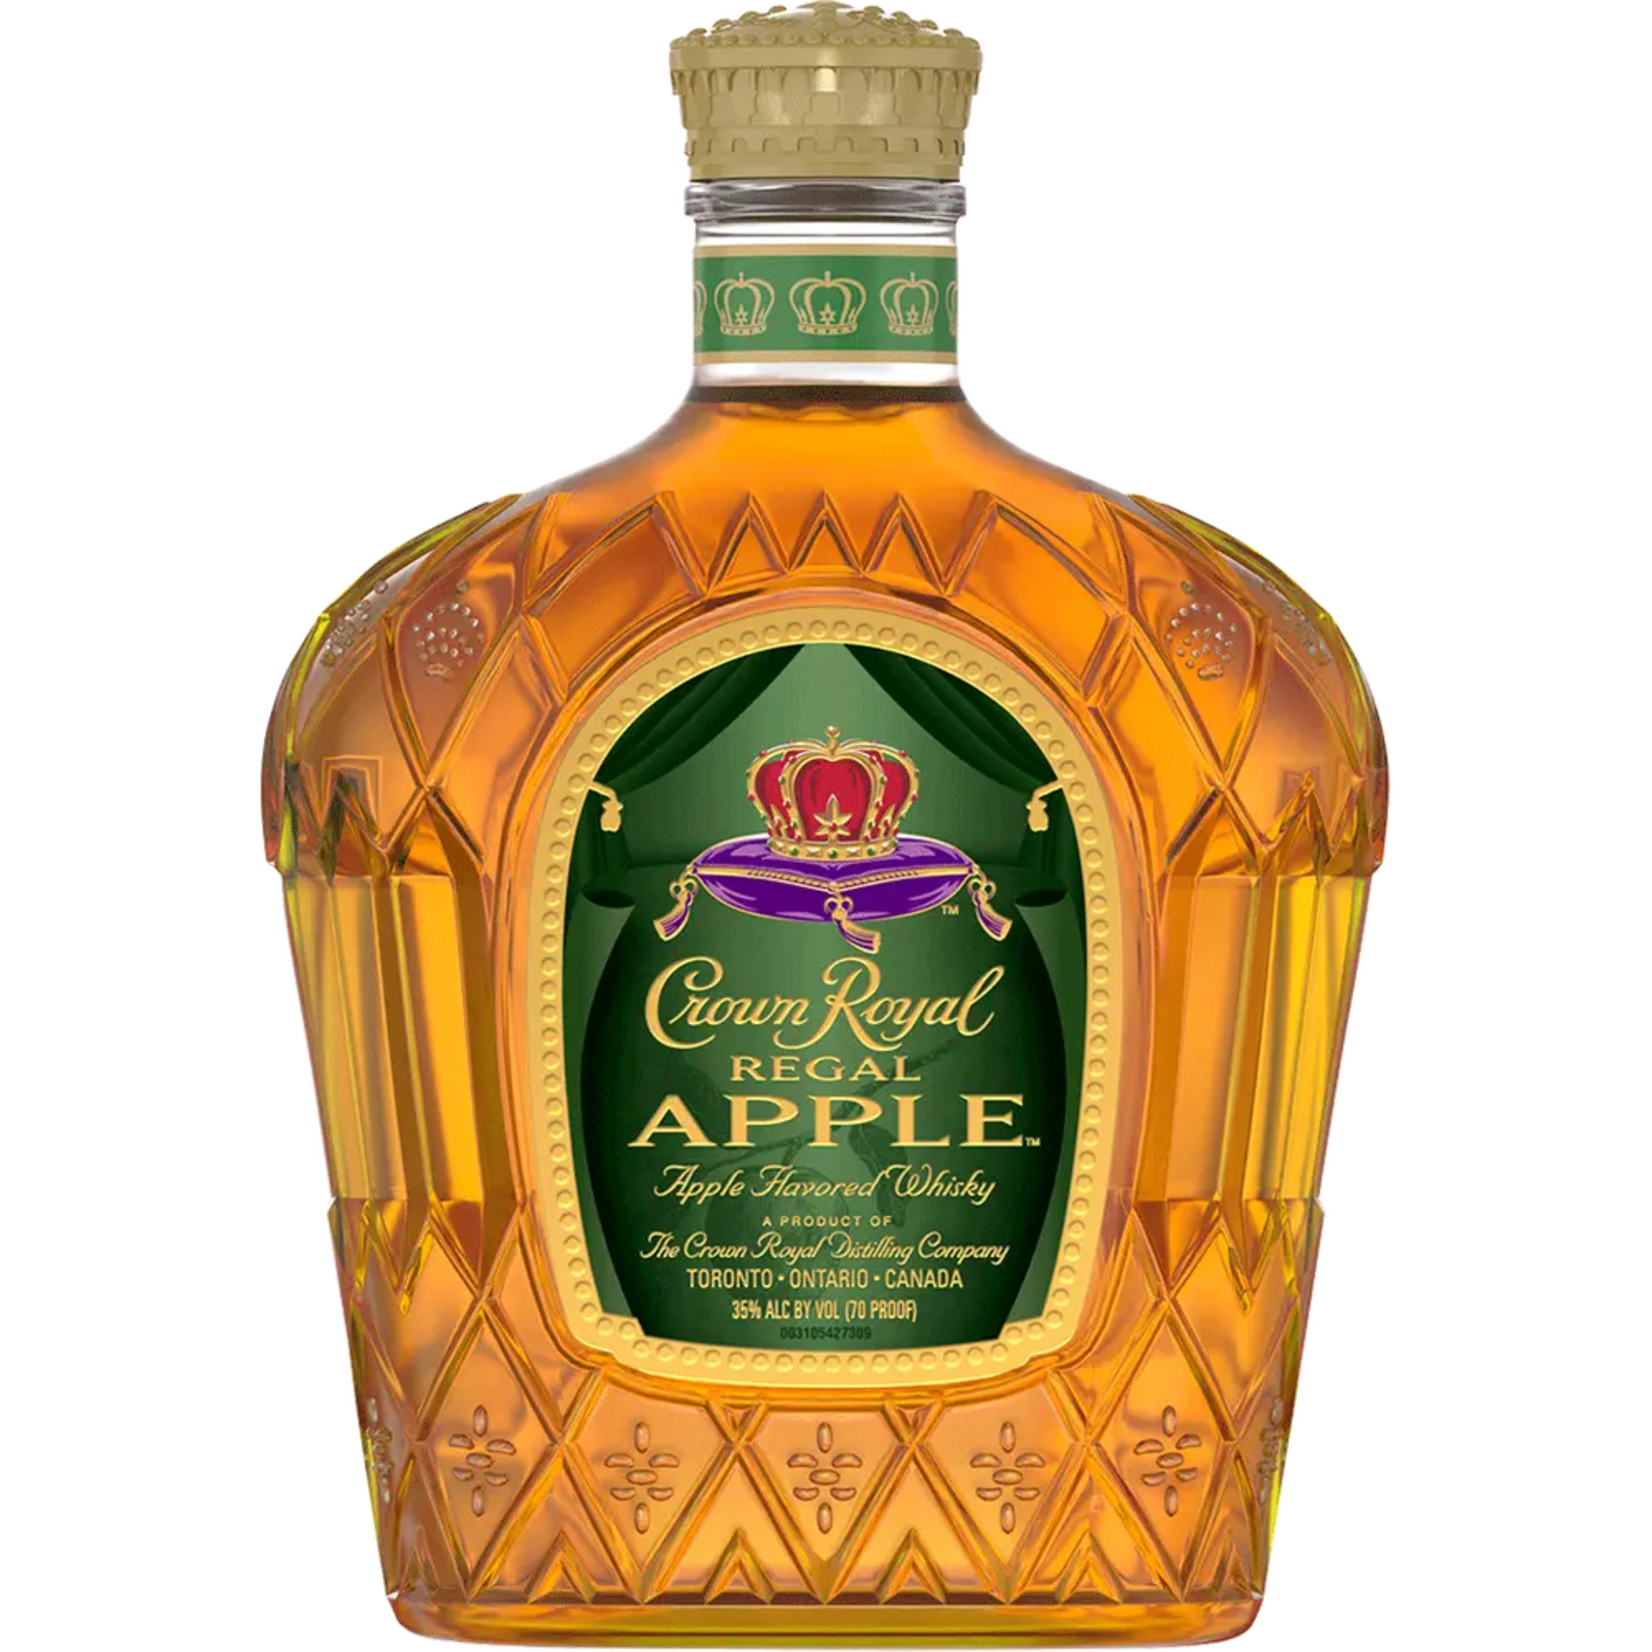 Crown Royal Crown Royal Apple Flavored Whisky Regal 70Proof 750ml